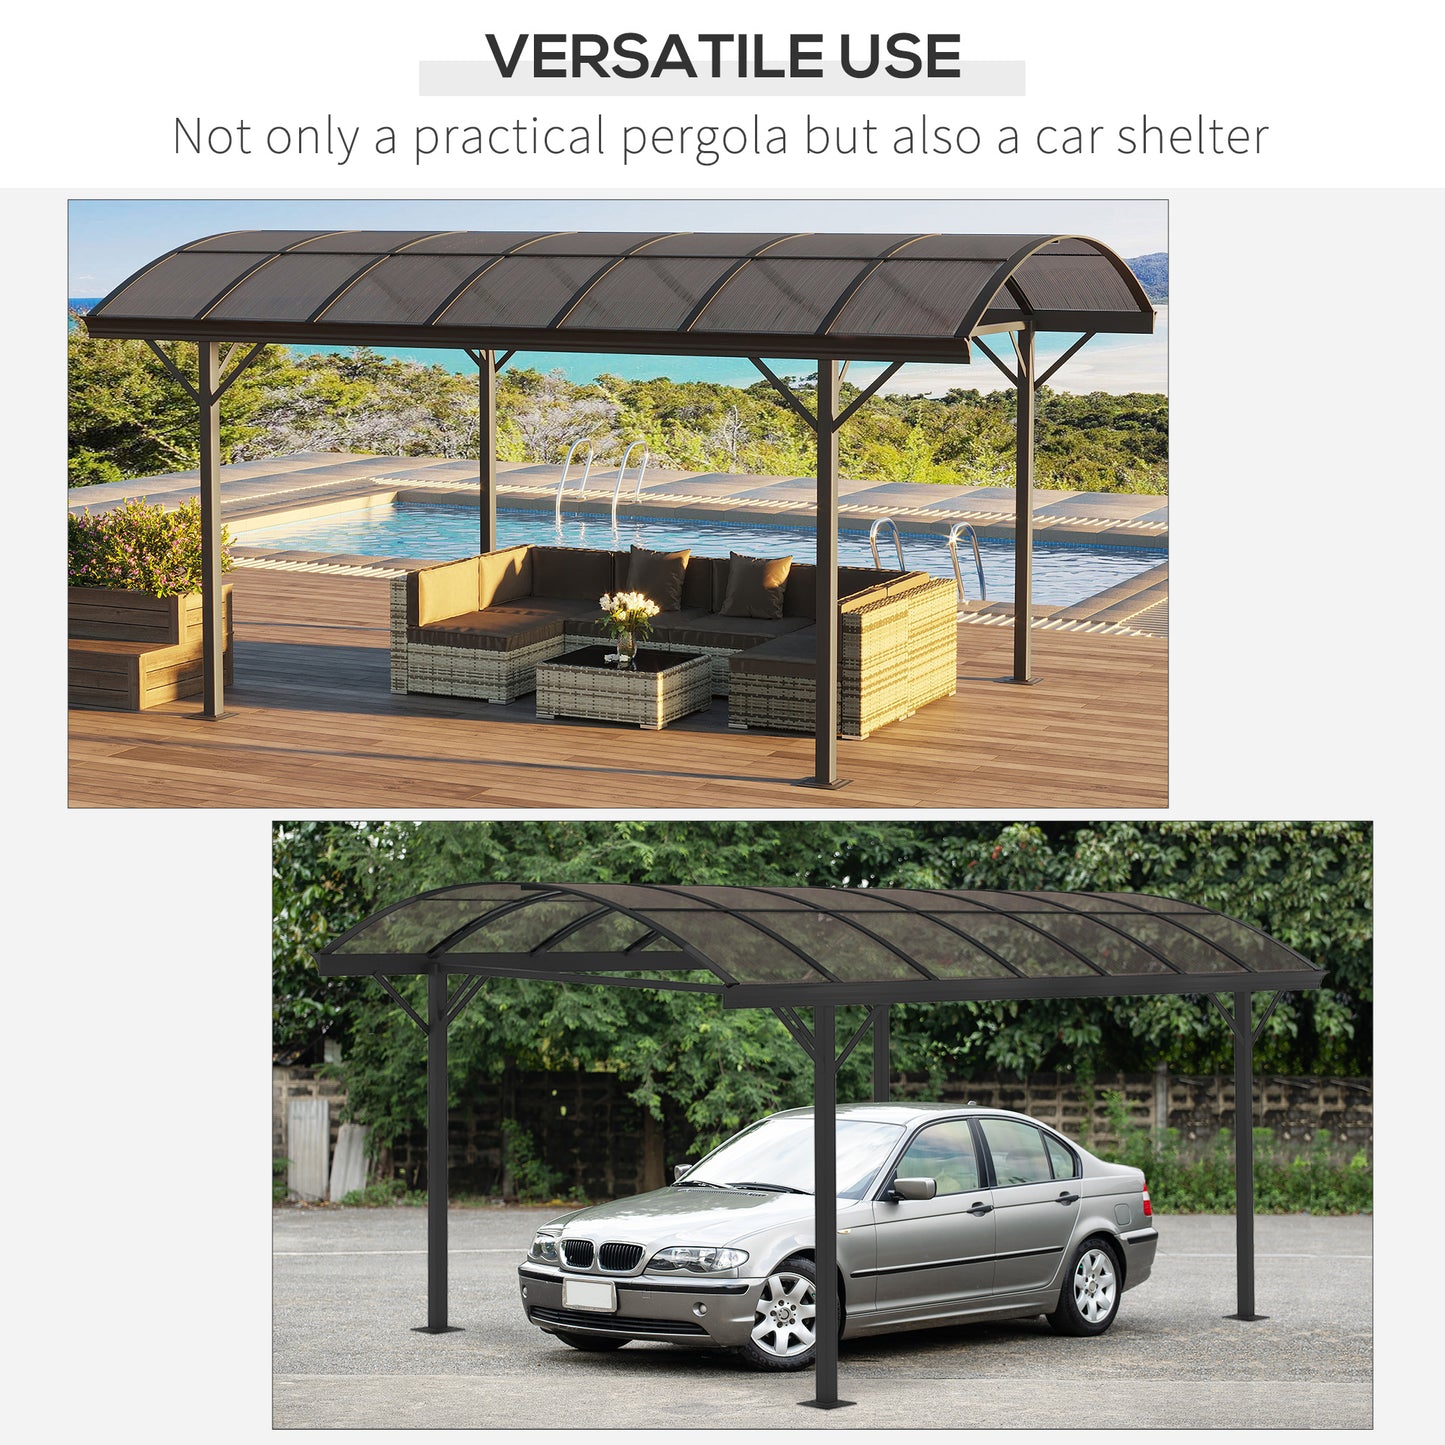 Outsunny 5 x 3(m) Hardtop Pergola Aluminium Gazebo Pavilion Garden Shelter Carport with Polycarbonate Roof, Brown Aluminiuim Frame w/